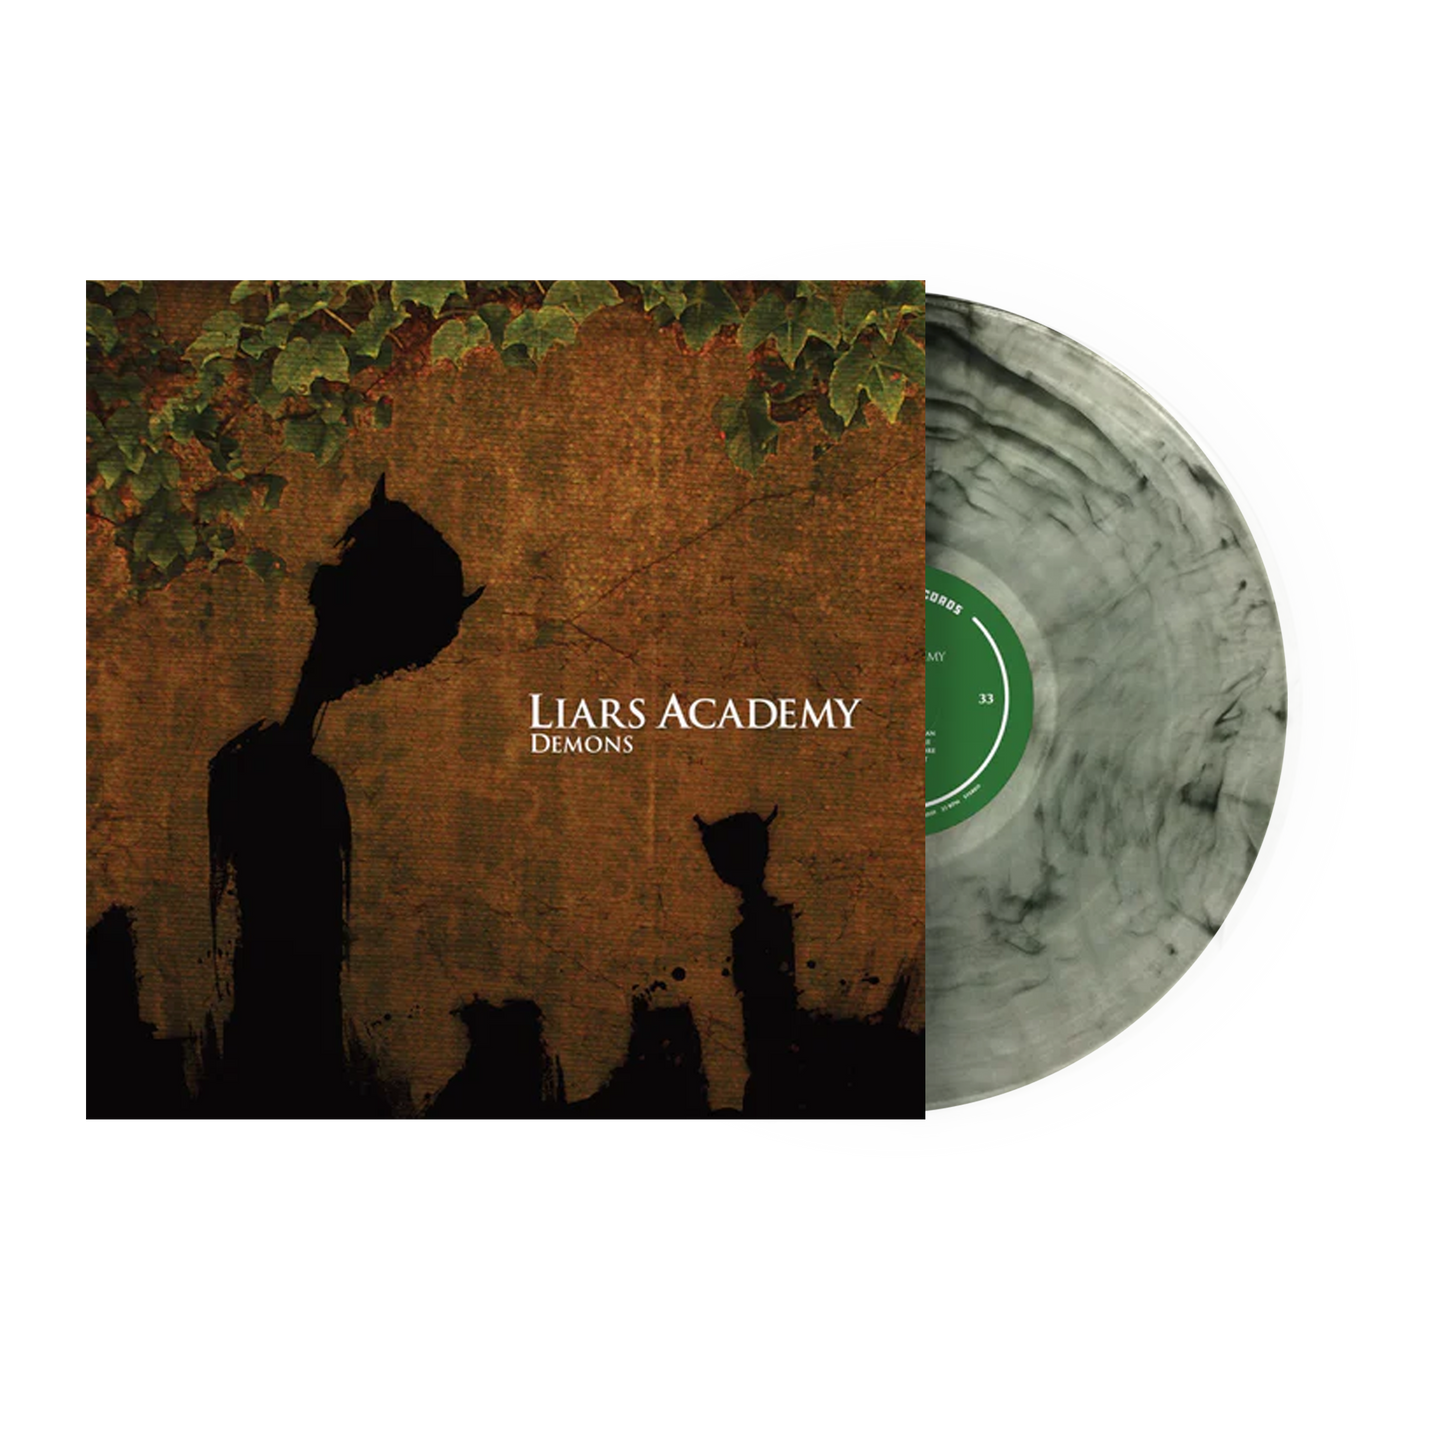 Liars Academy "Demons" LP